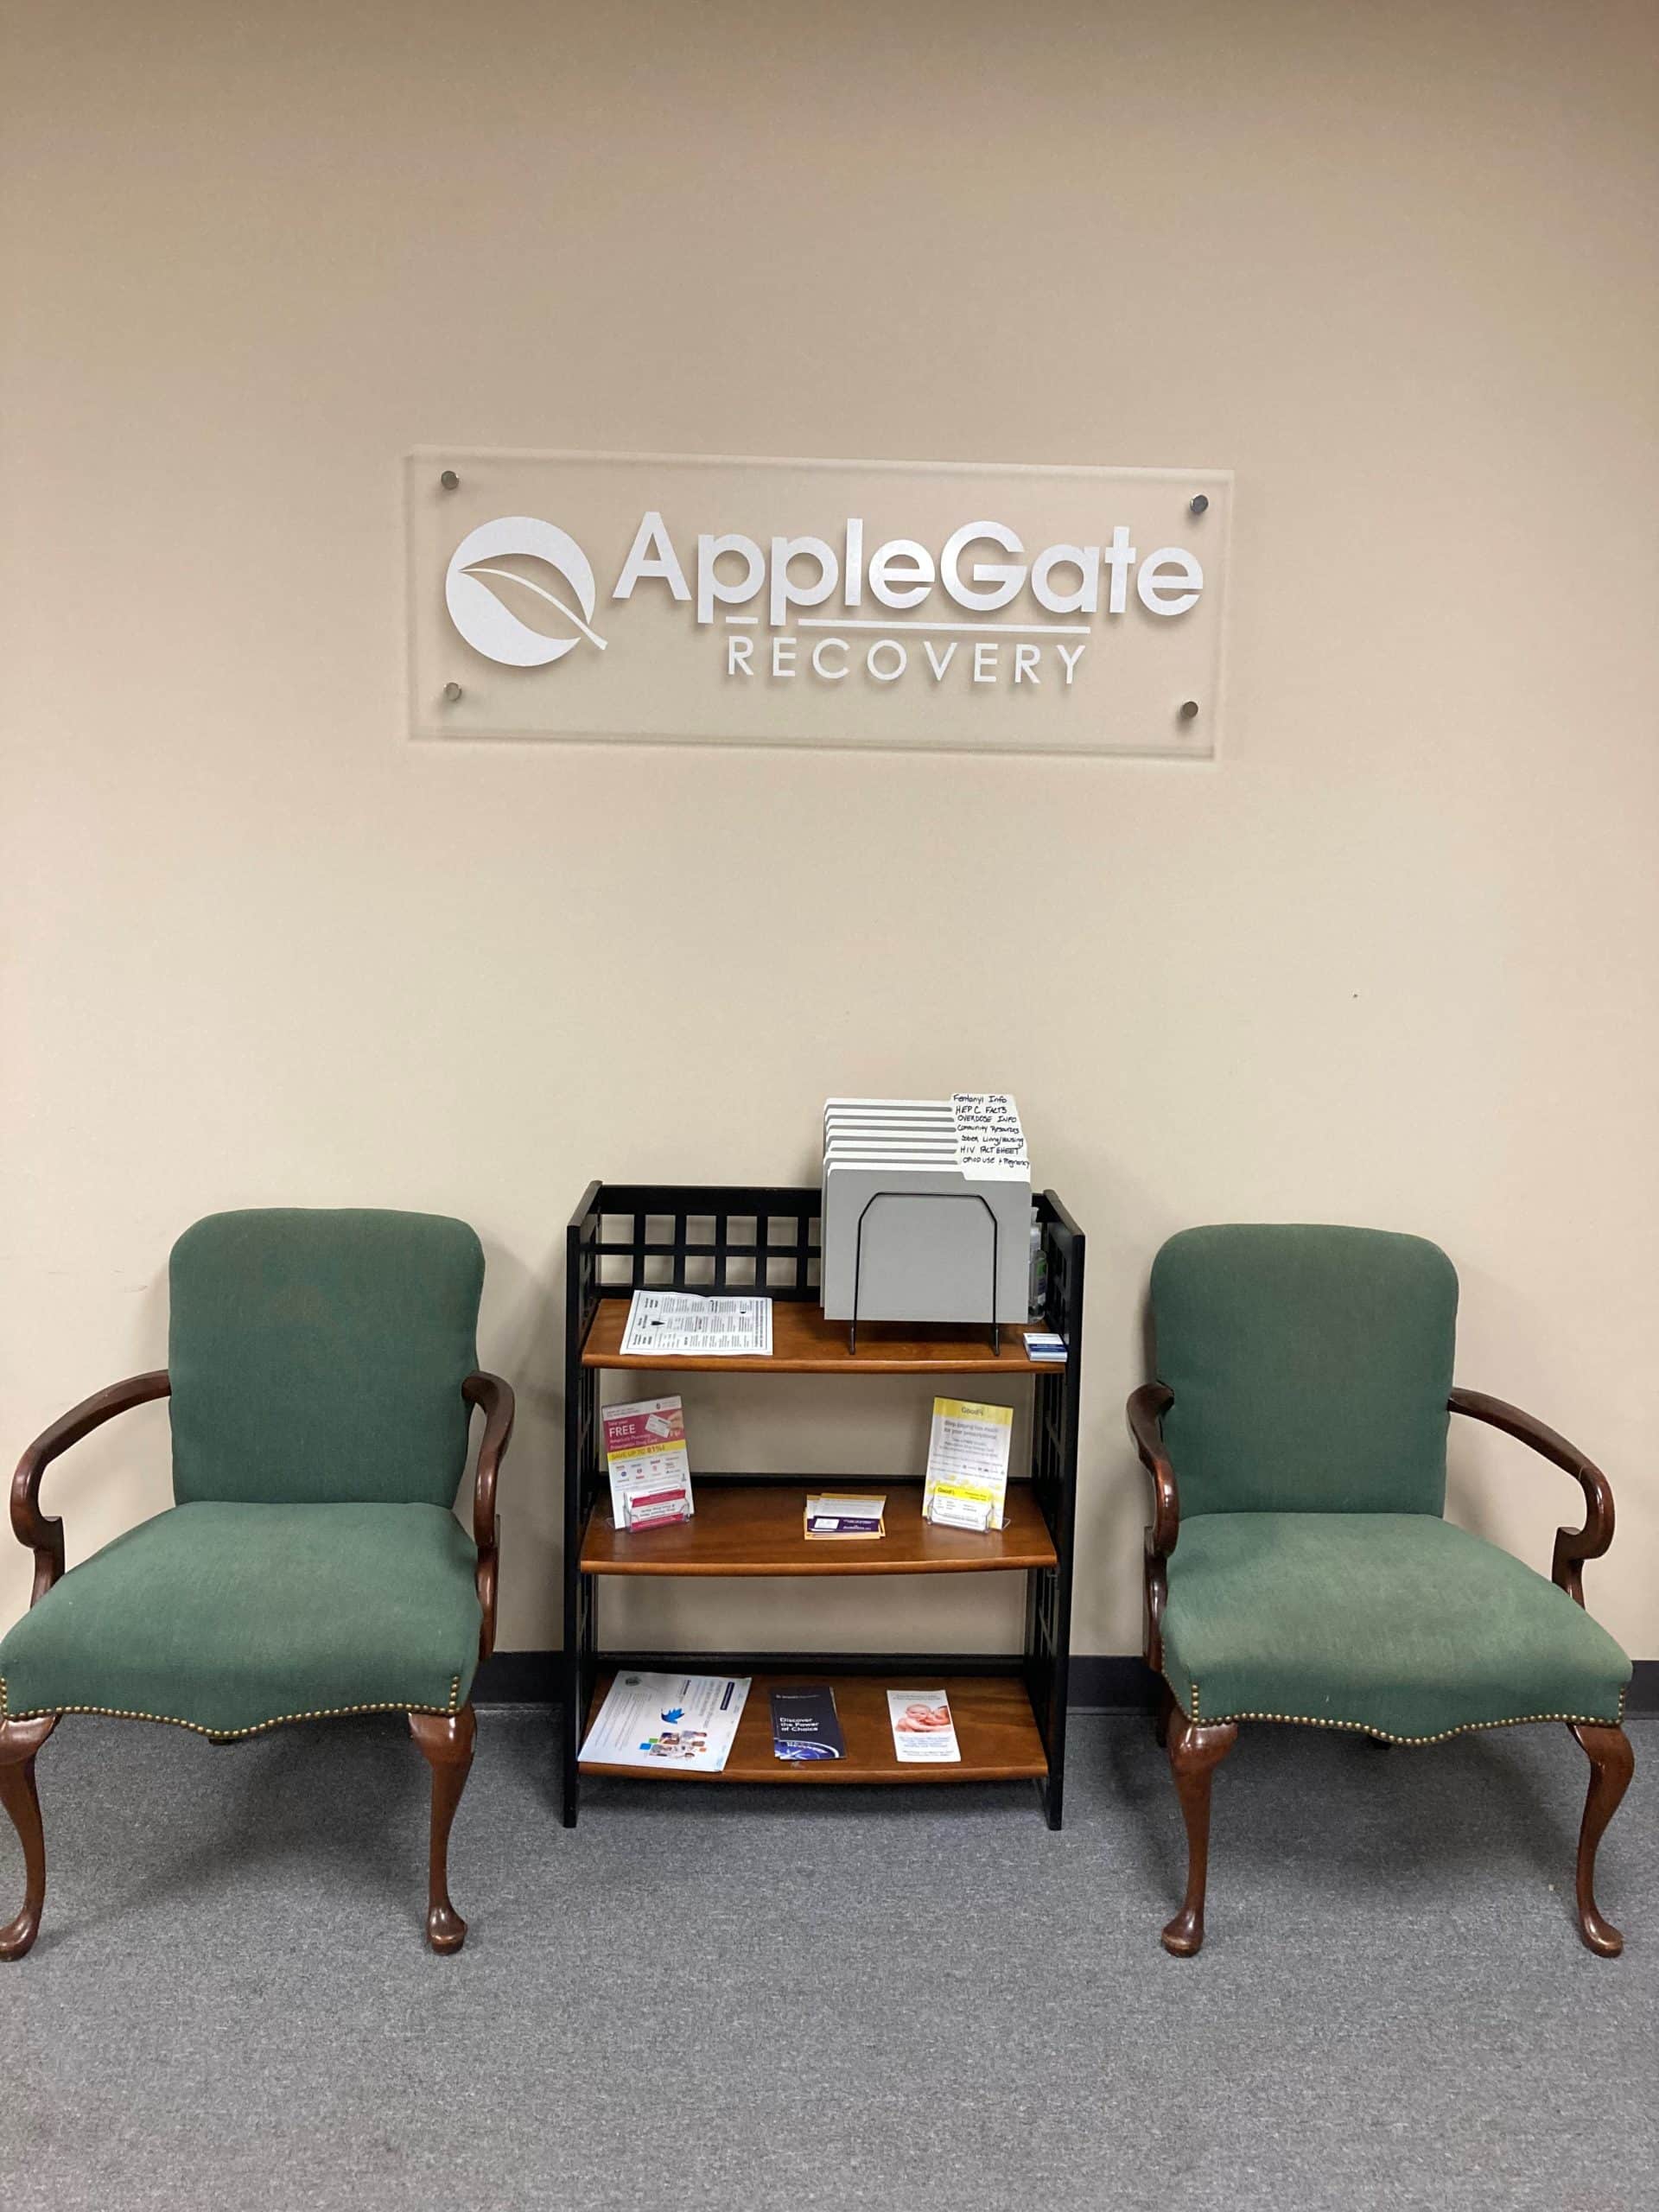 AppleGate Recovery lobby in Dickson, TN